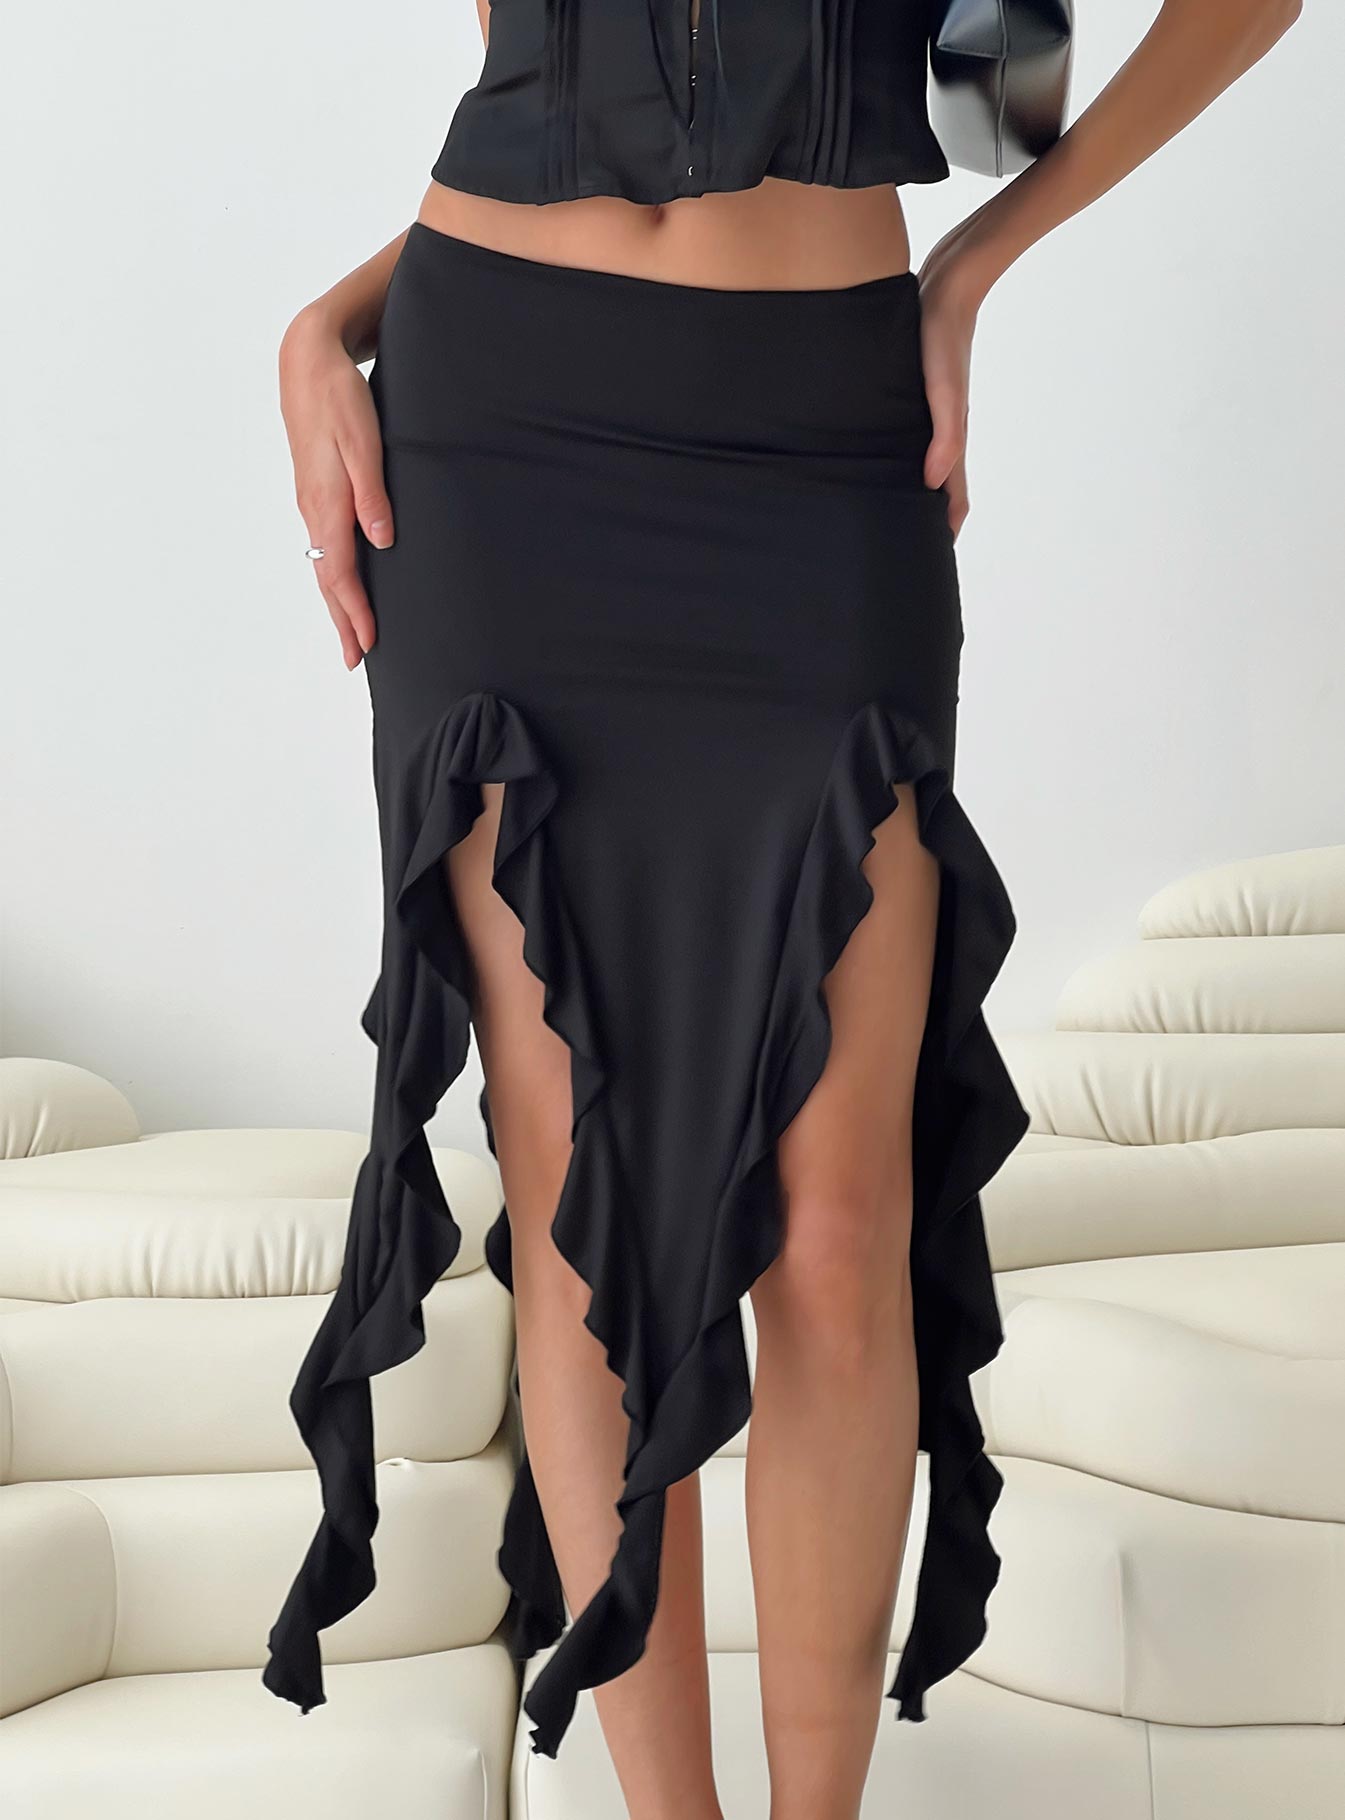 Glenda asymmetrical skirt – free pdf sewing pattern – Tiana's Closet